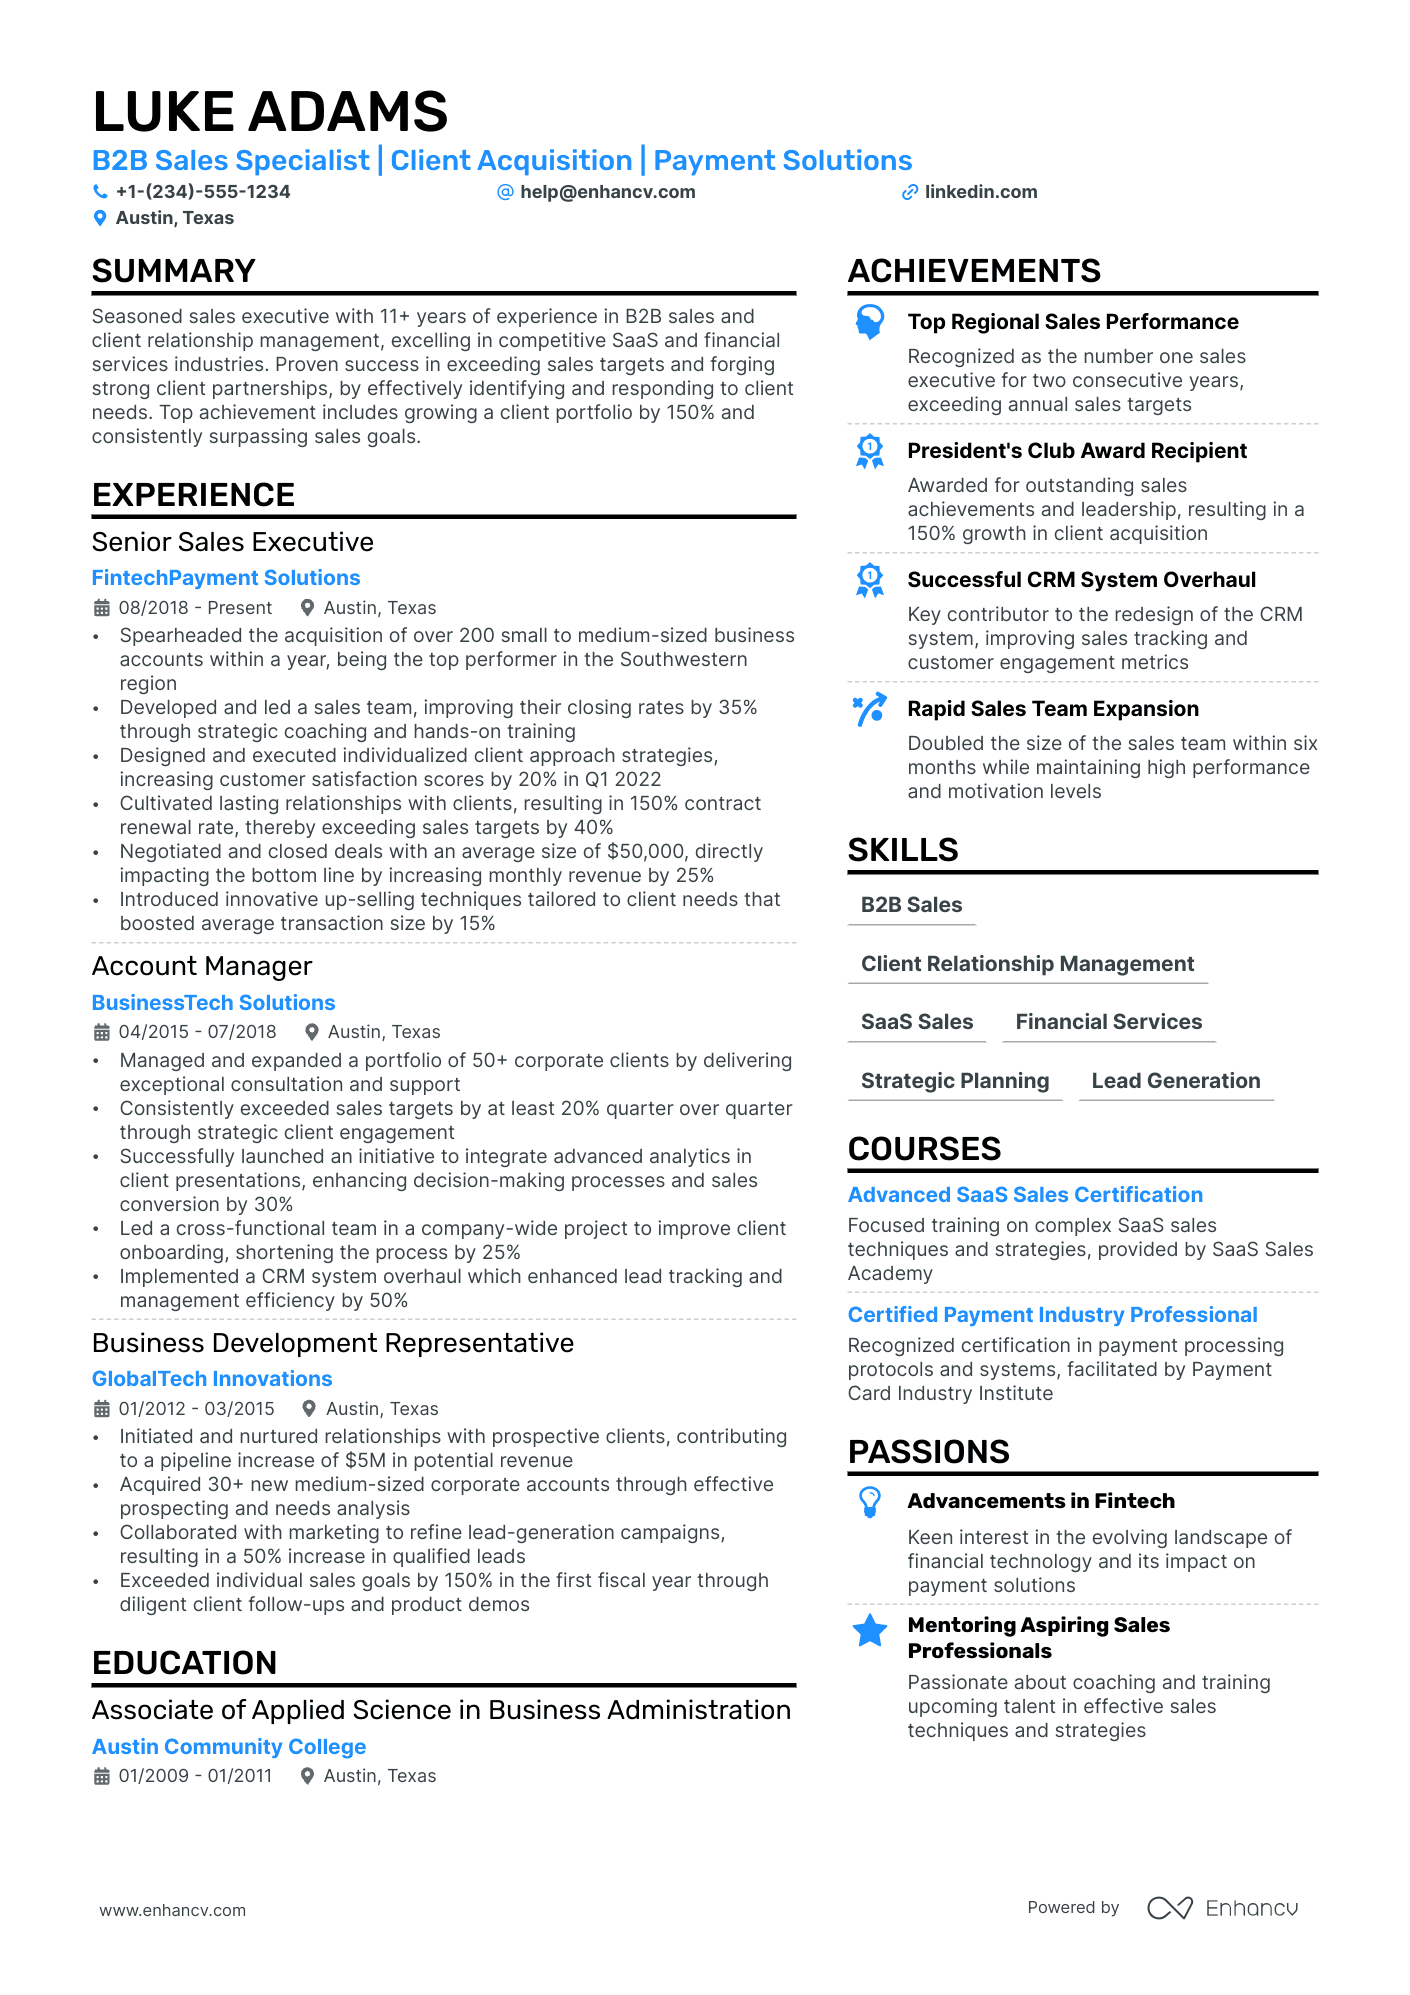 sales consultant job description for resume